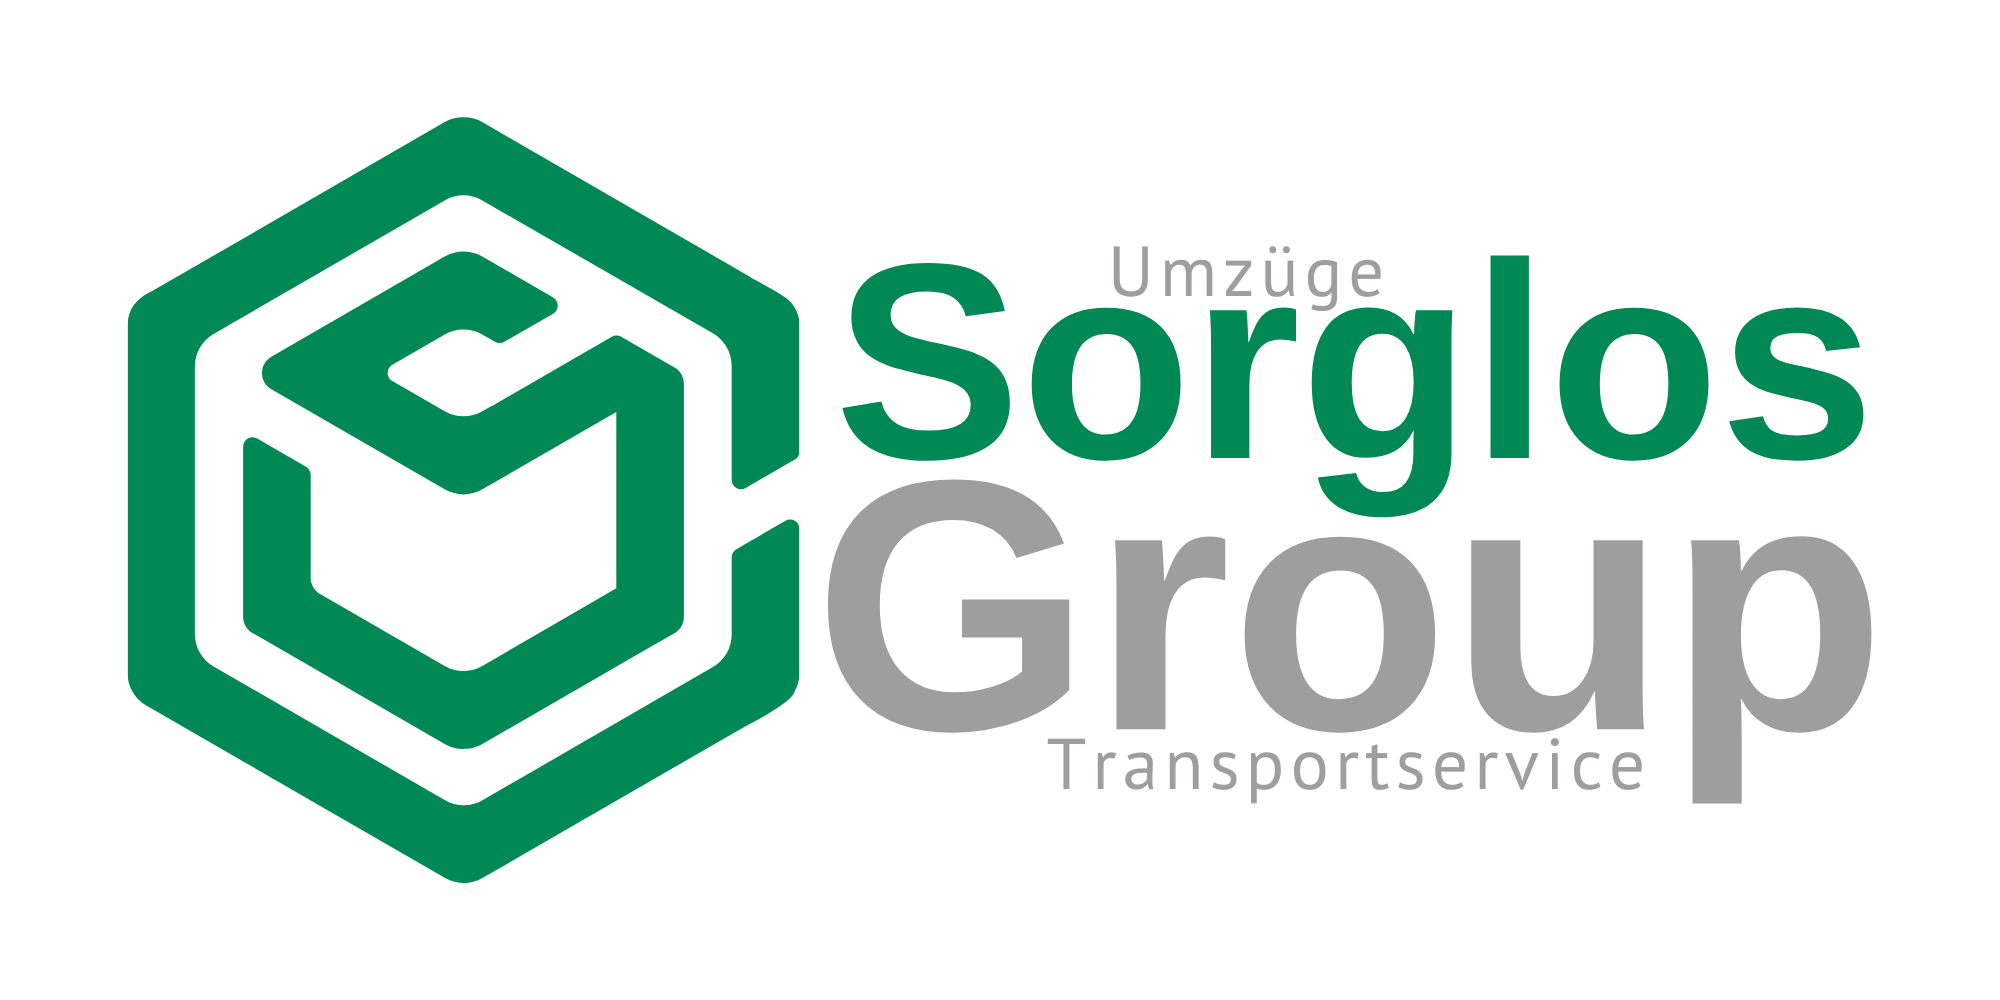 Sorglos Group Umzug und Transportservice